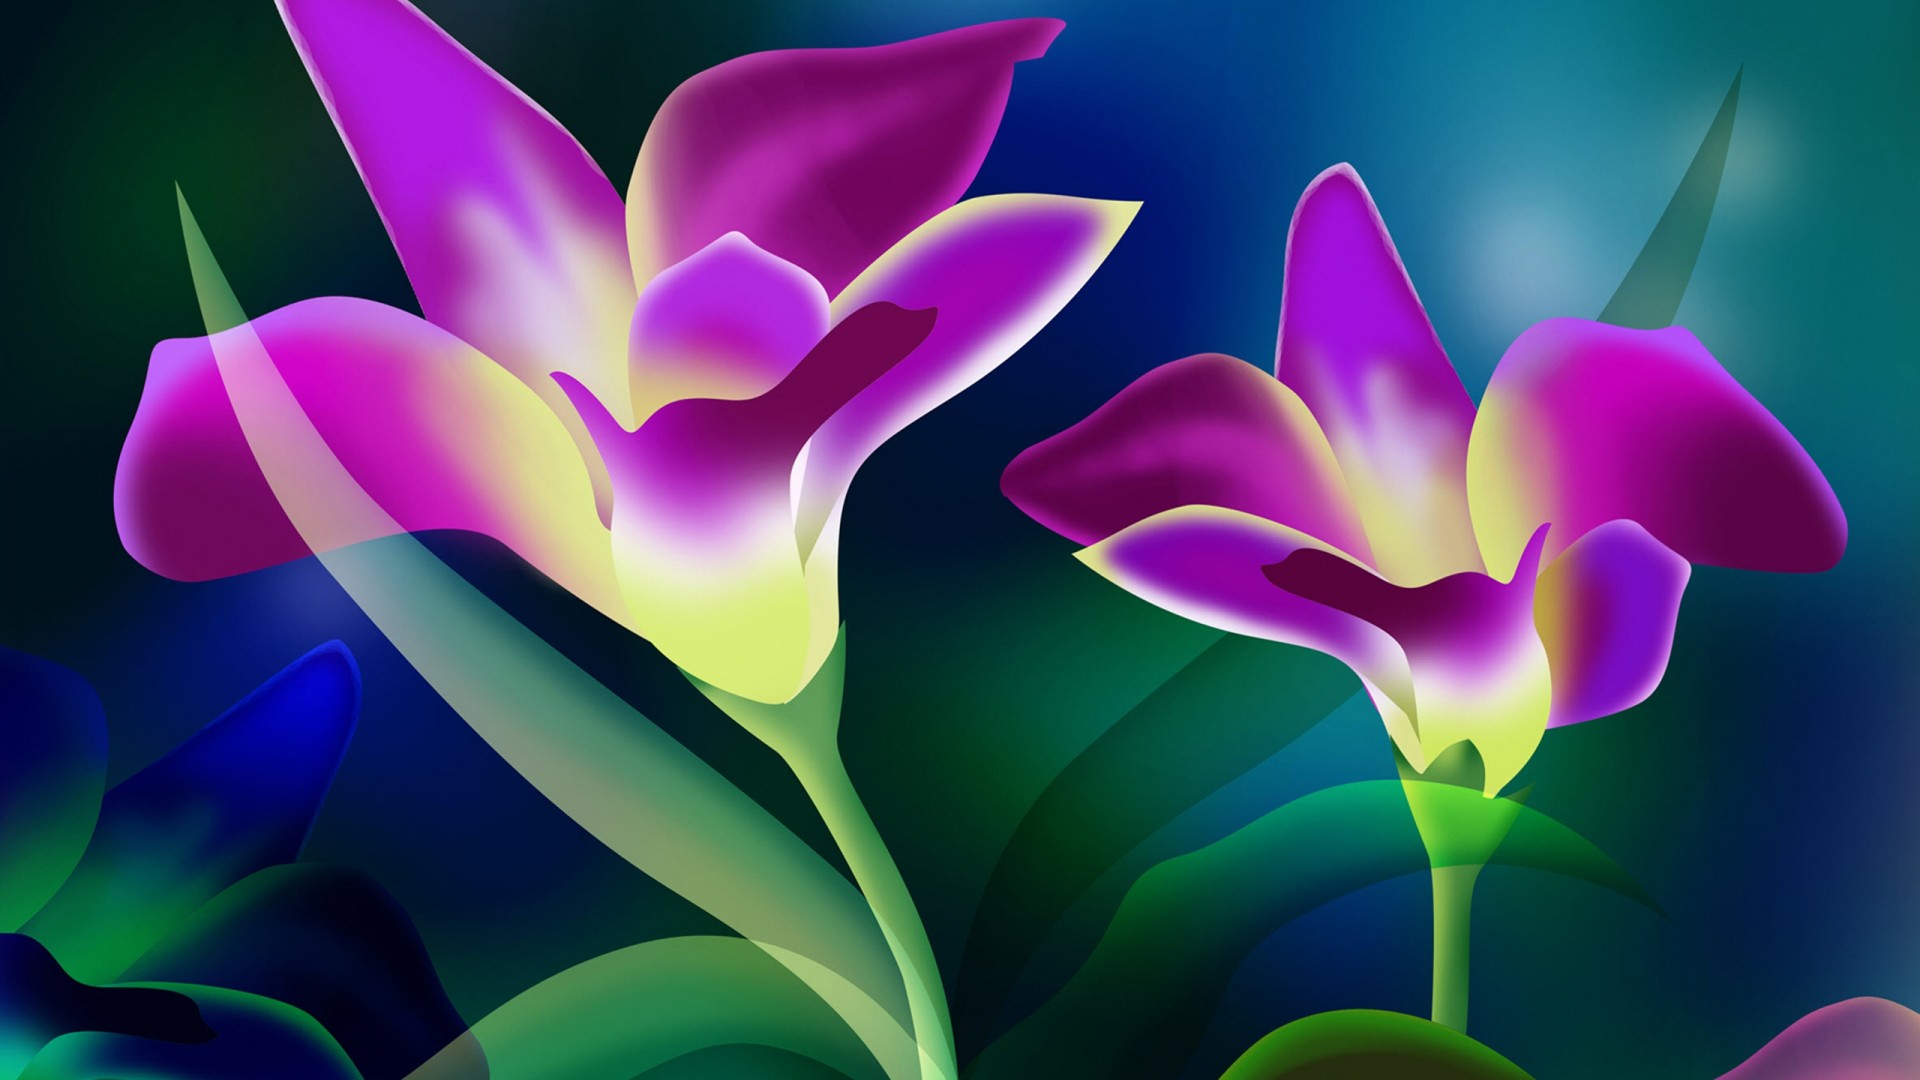 flower wallpaper hd download free,petal,flower,purple,plant,violet